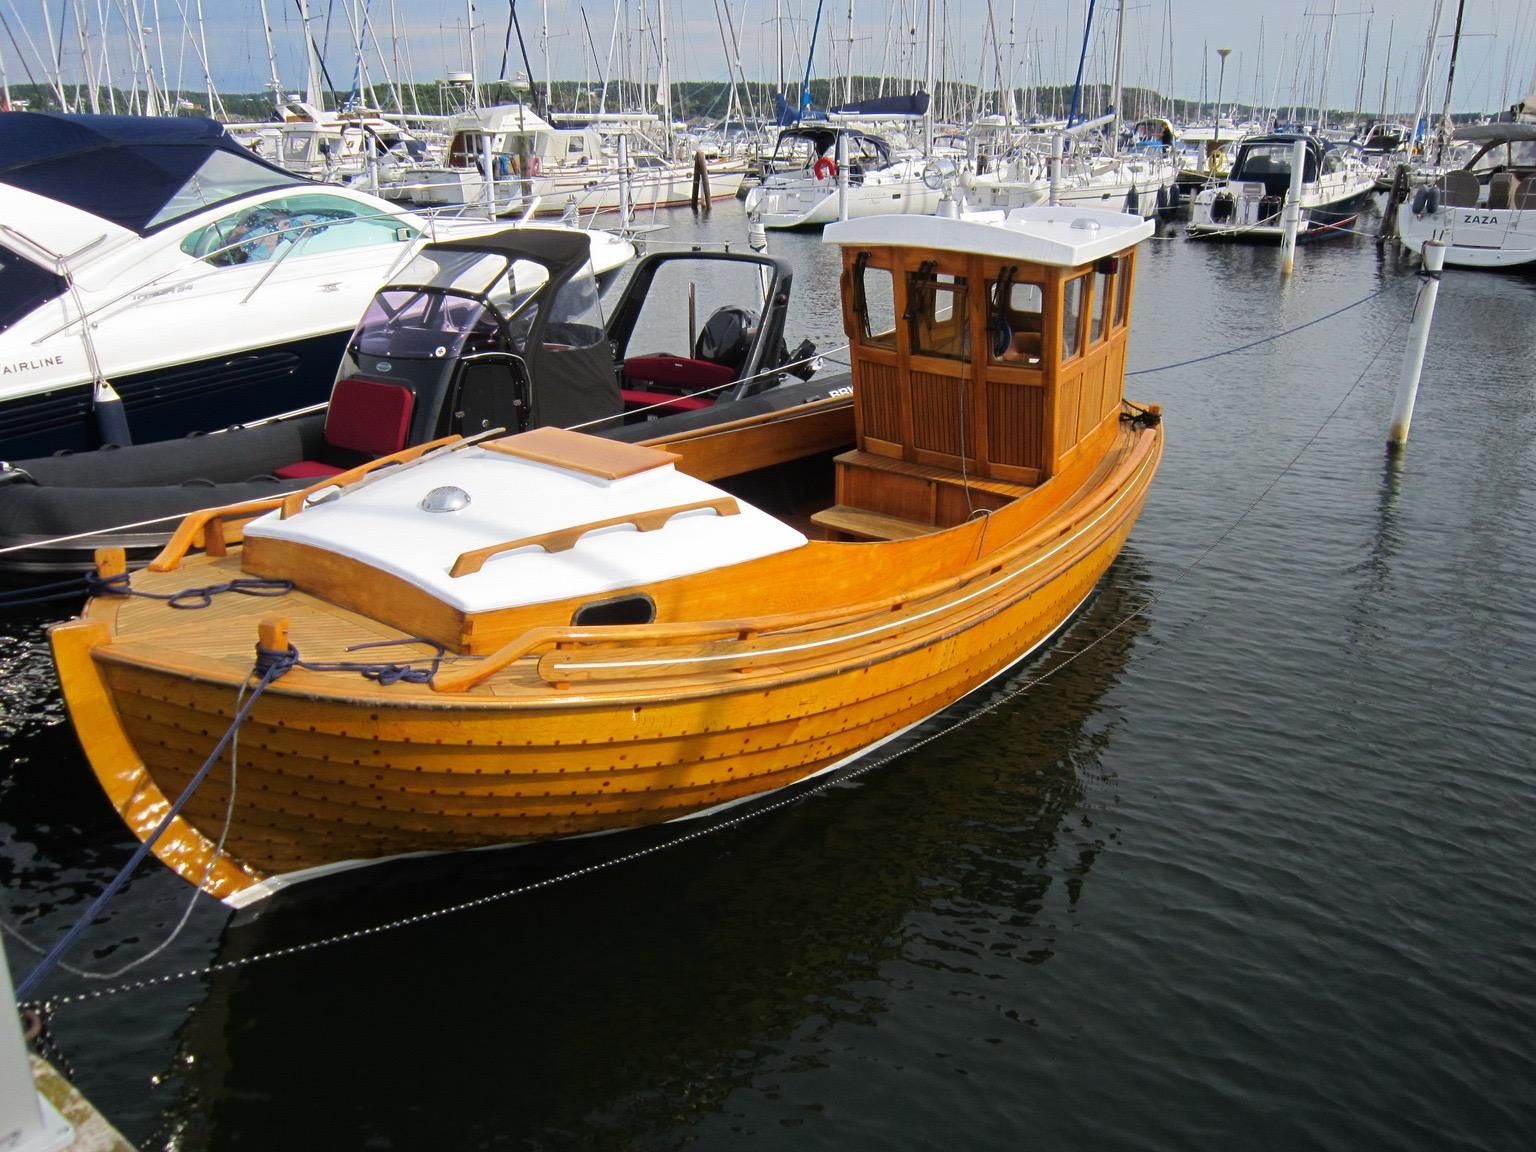 4 Ways to Caulk an Old Wooden Boat